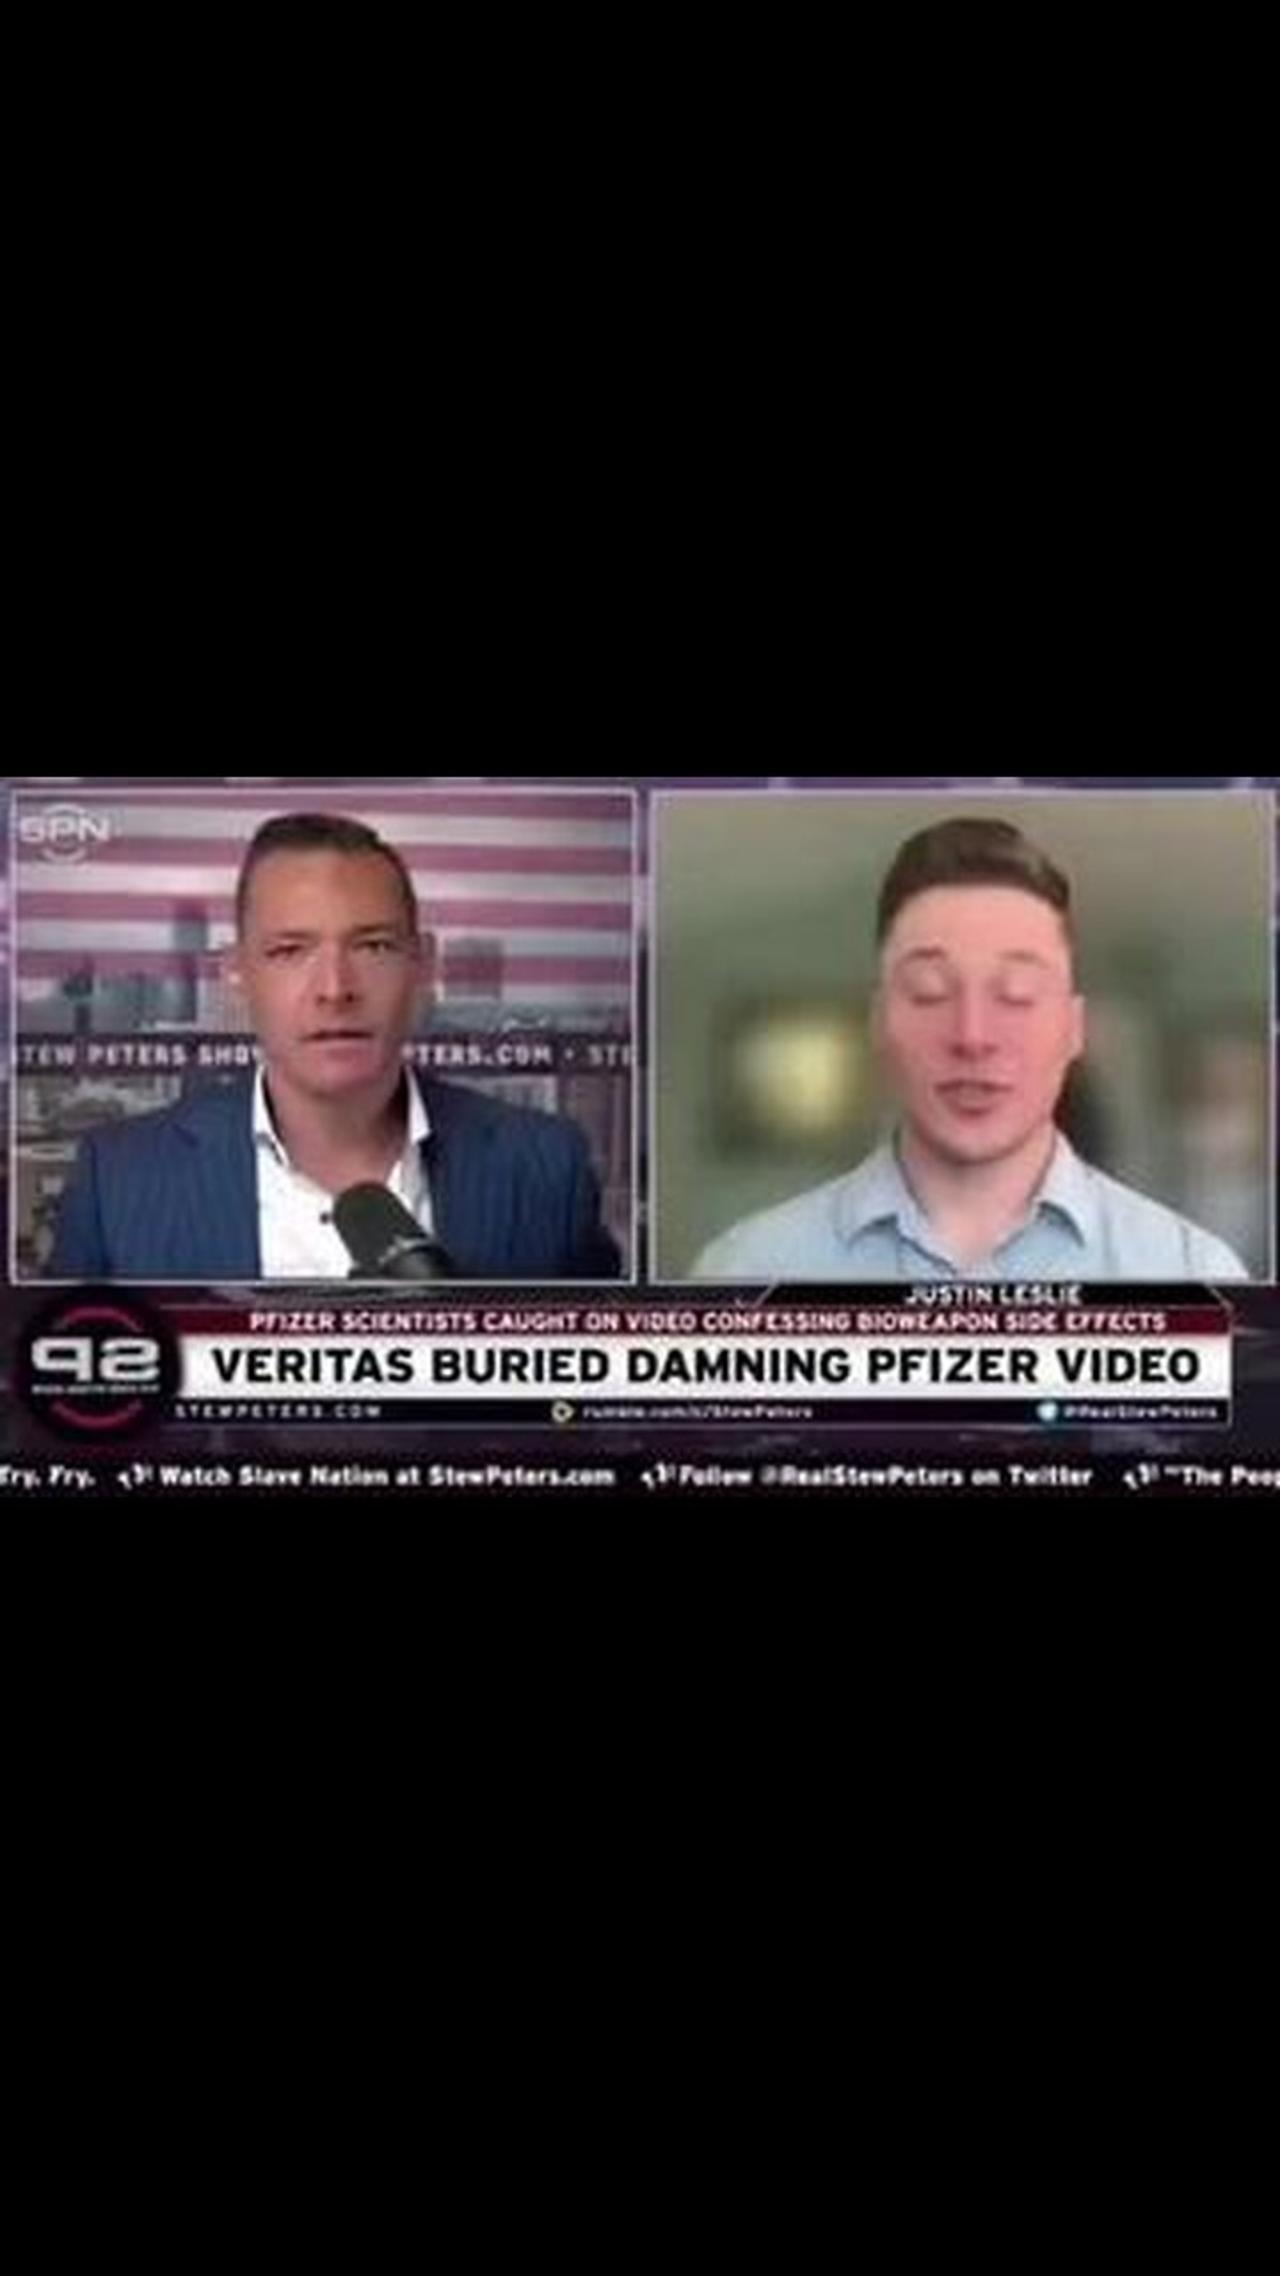 Project Veritas Buried Damning Pfizer Video